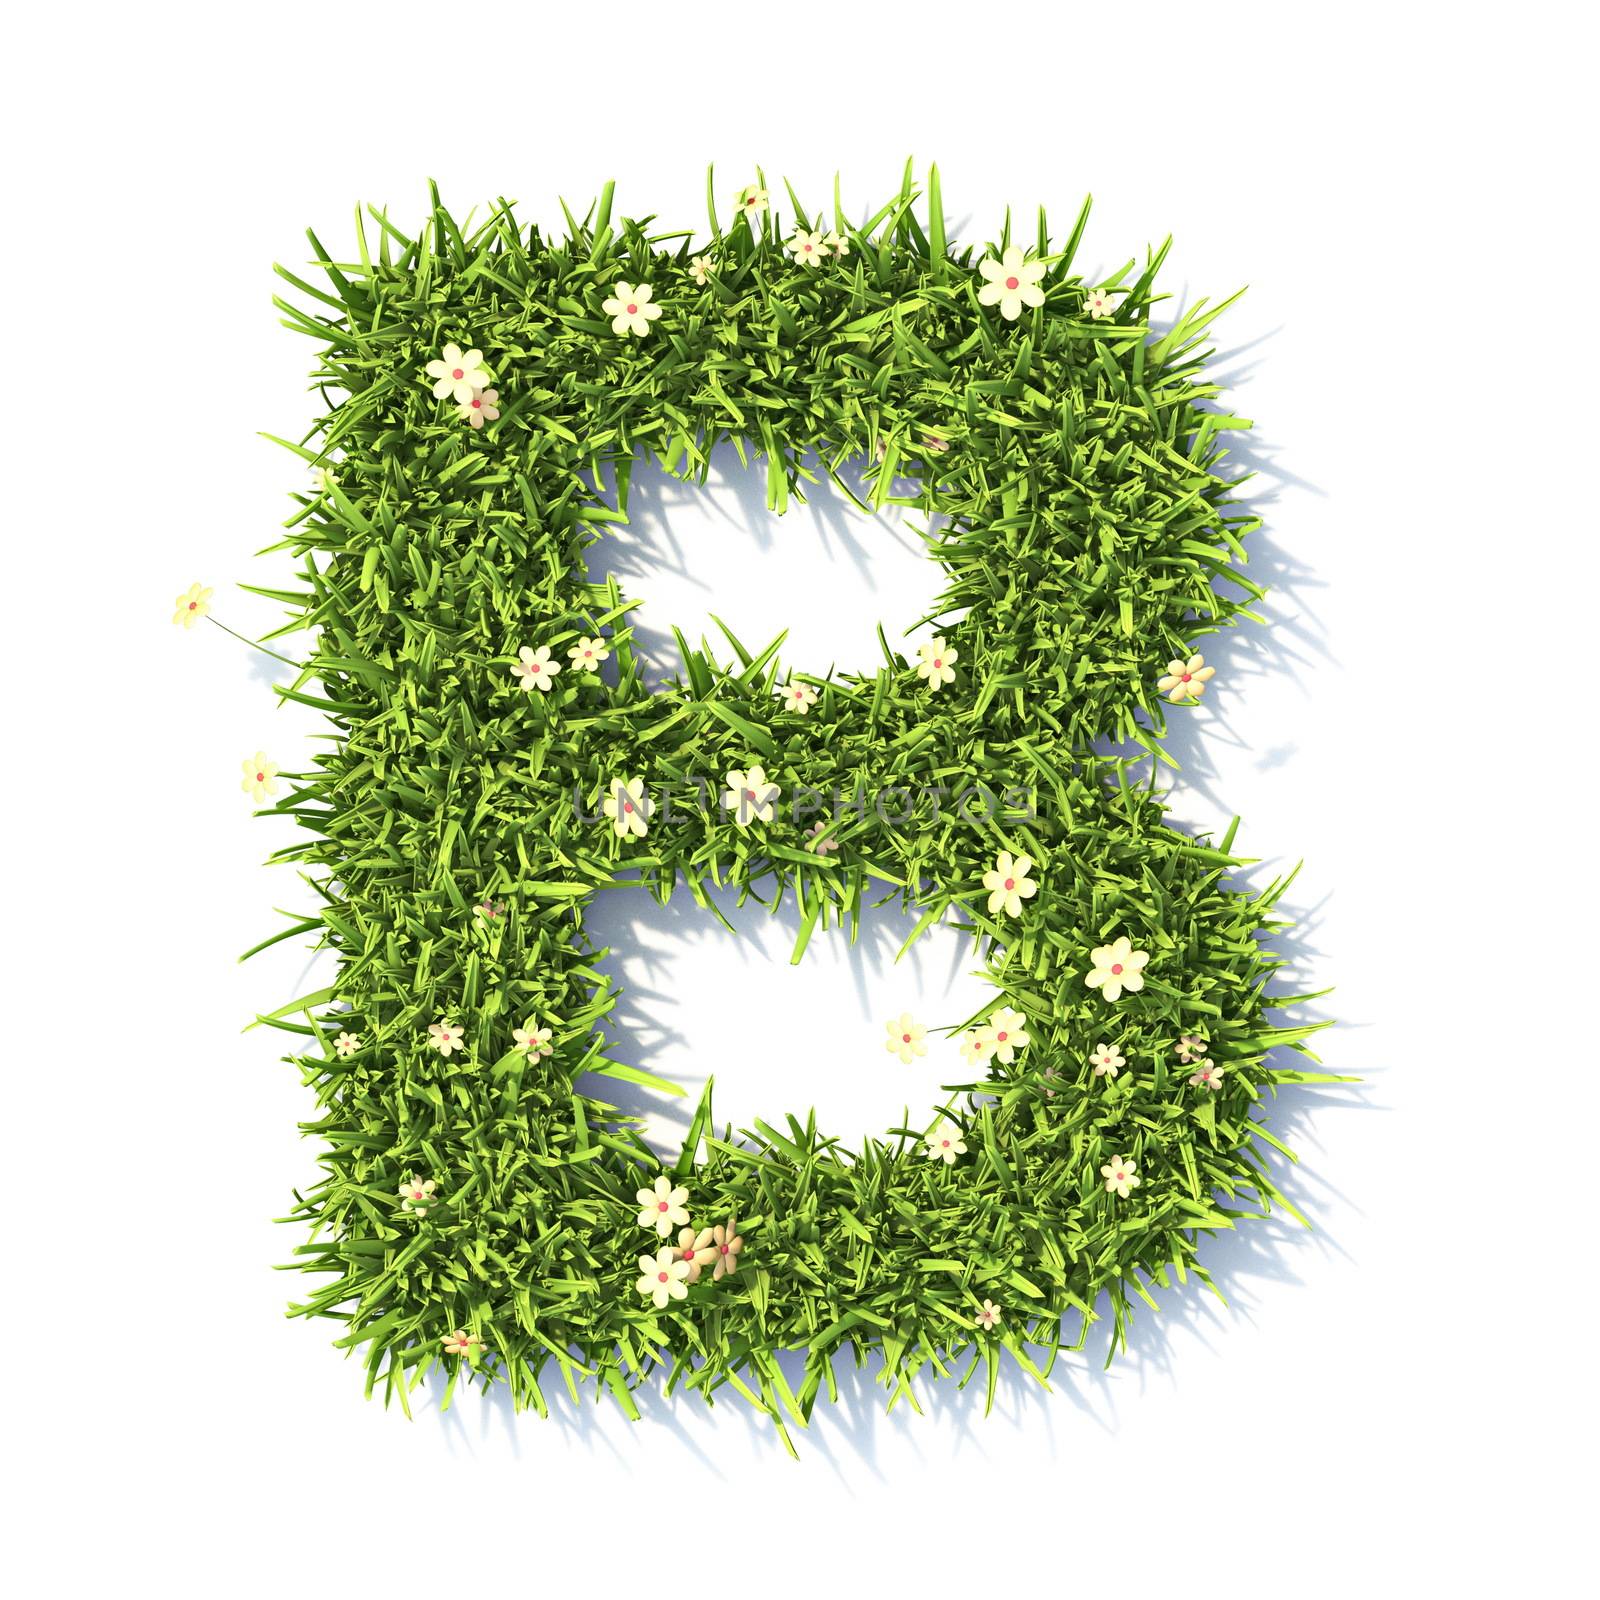 Grass font Letter B 3D rendering illustration isolated on white background